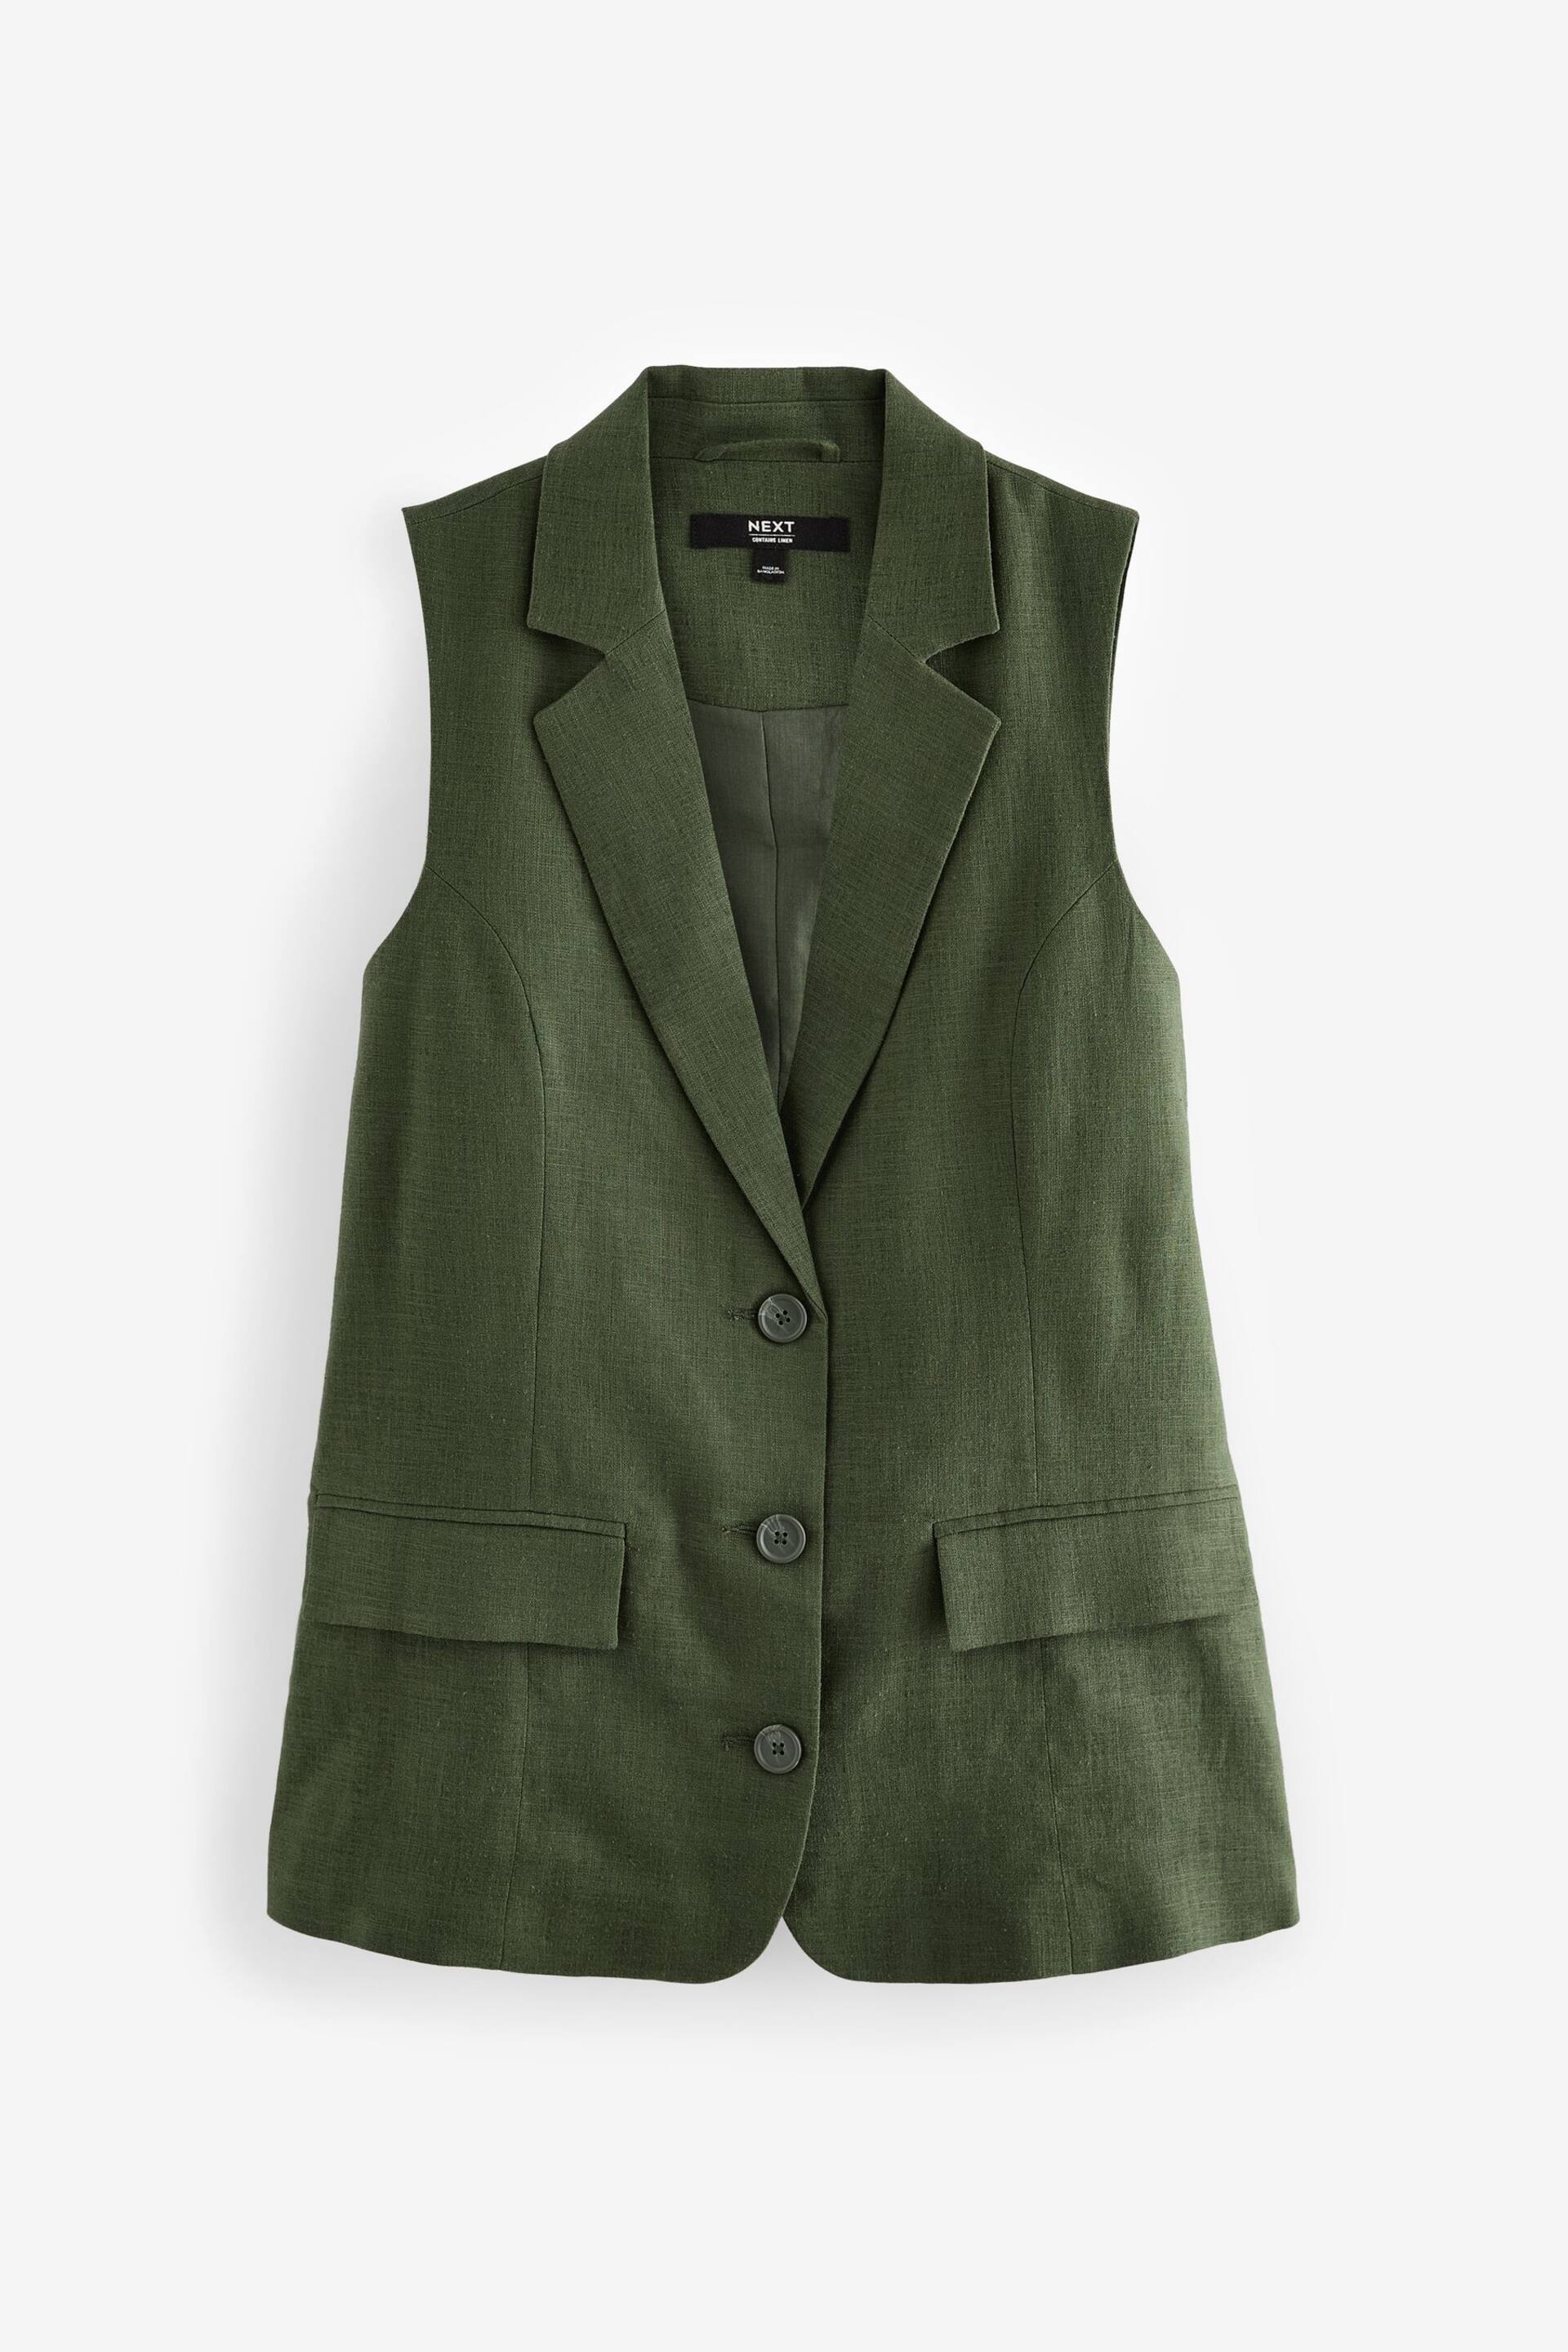 Khaki Green Linen Blend Long Line Waistcoat - Image 5 of 6